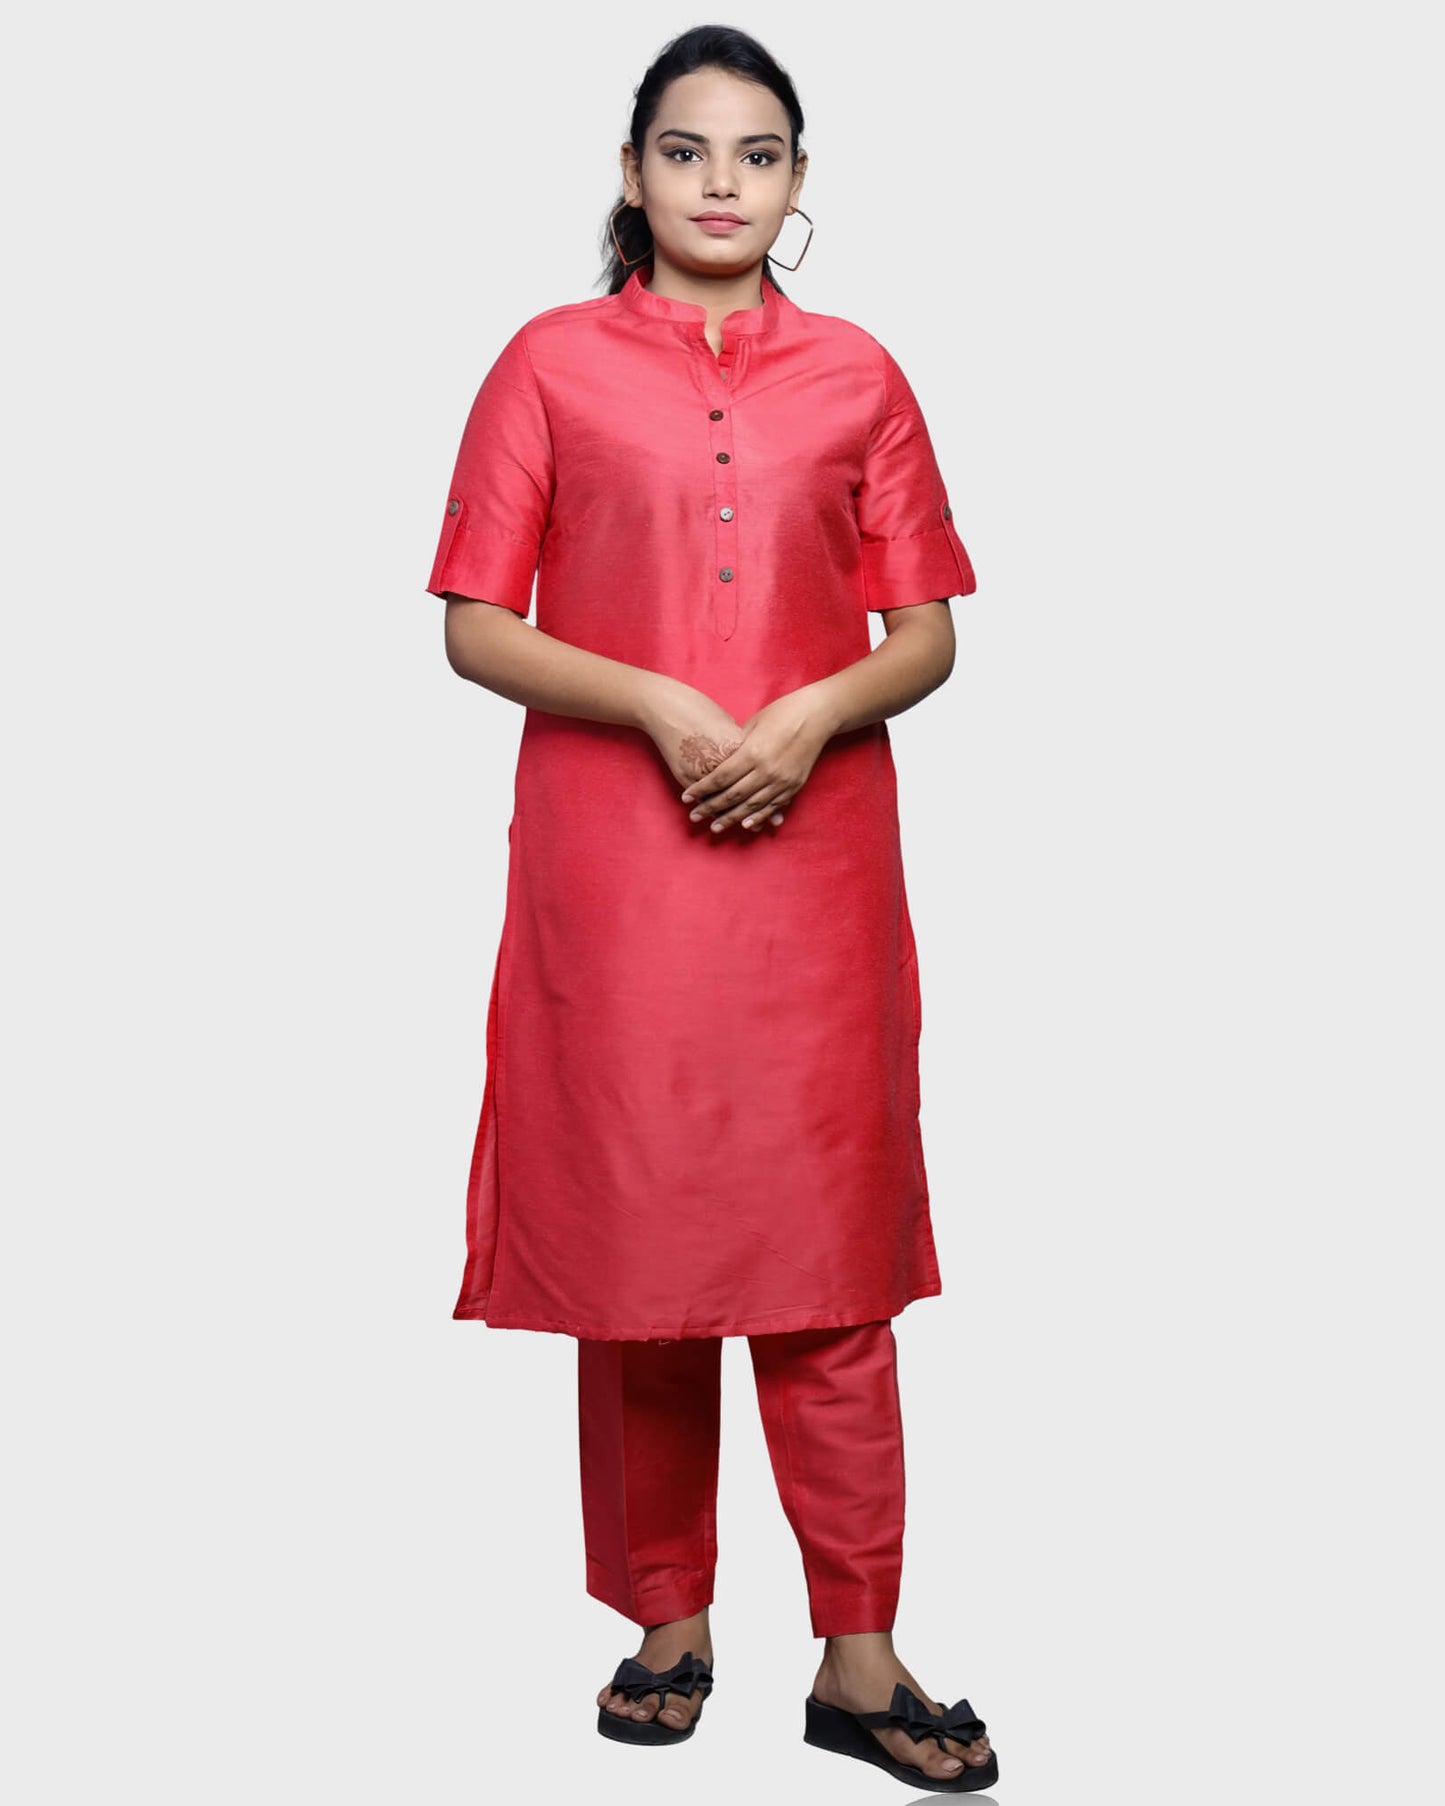 Silkfab Women's Banarasi Silk Strawberry Solid Kurti Pant Set - SILKFAB